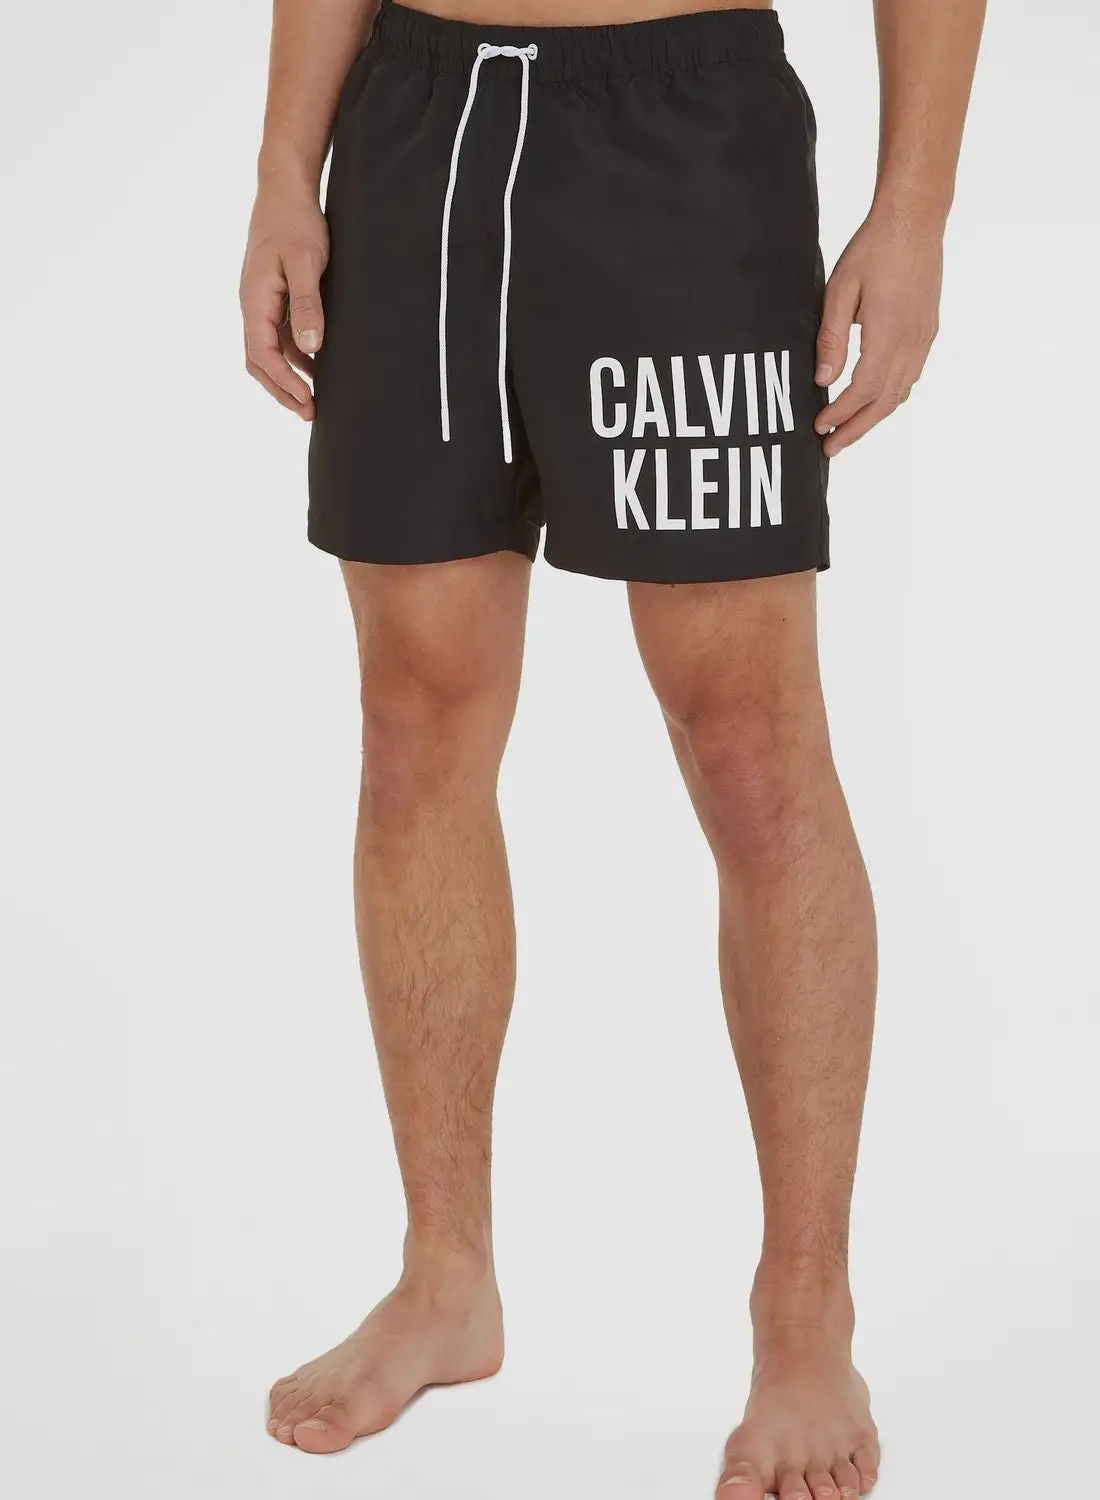 CALVIN KLEIN Logo Swim Shorts